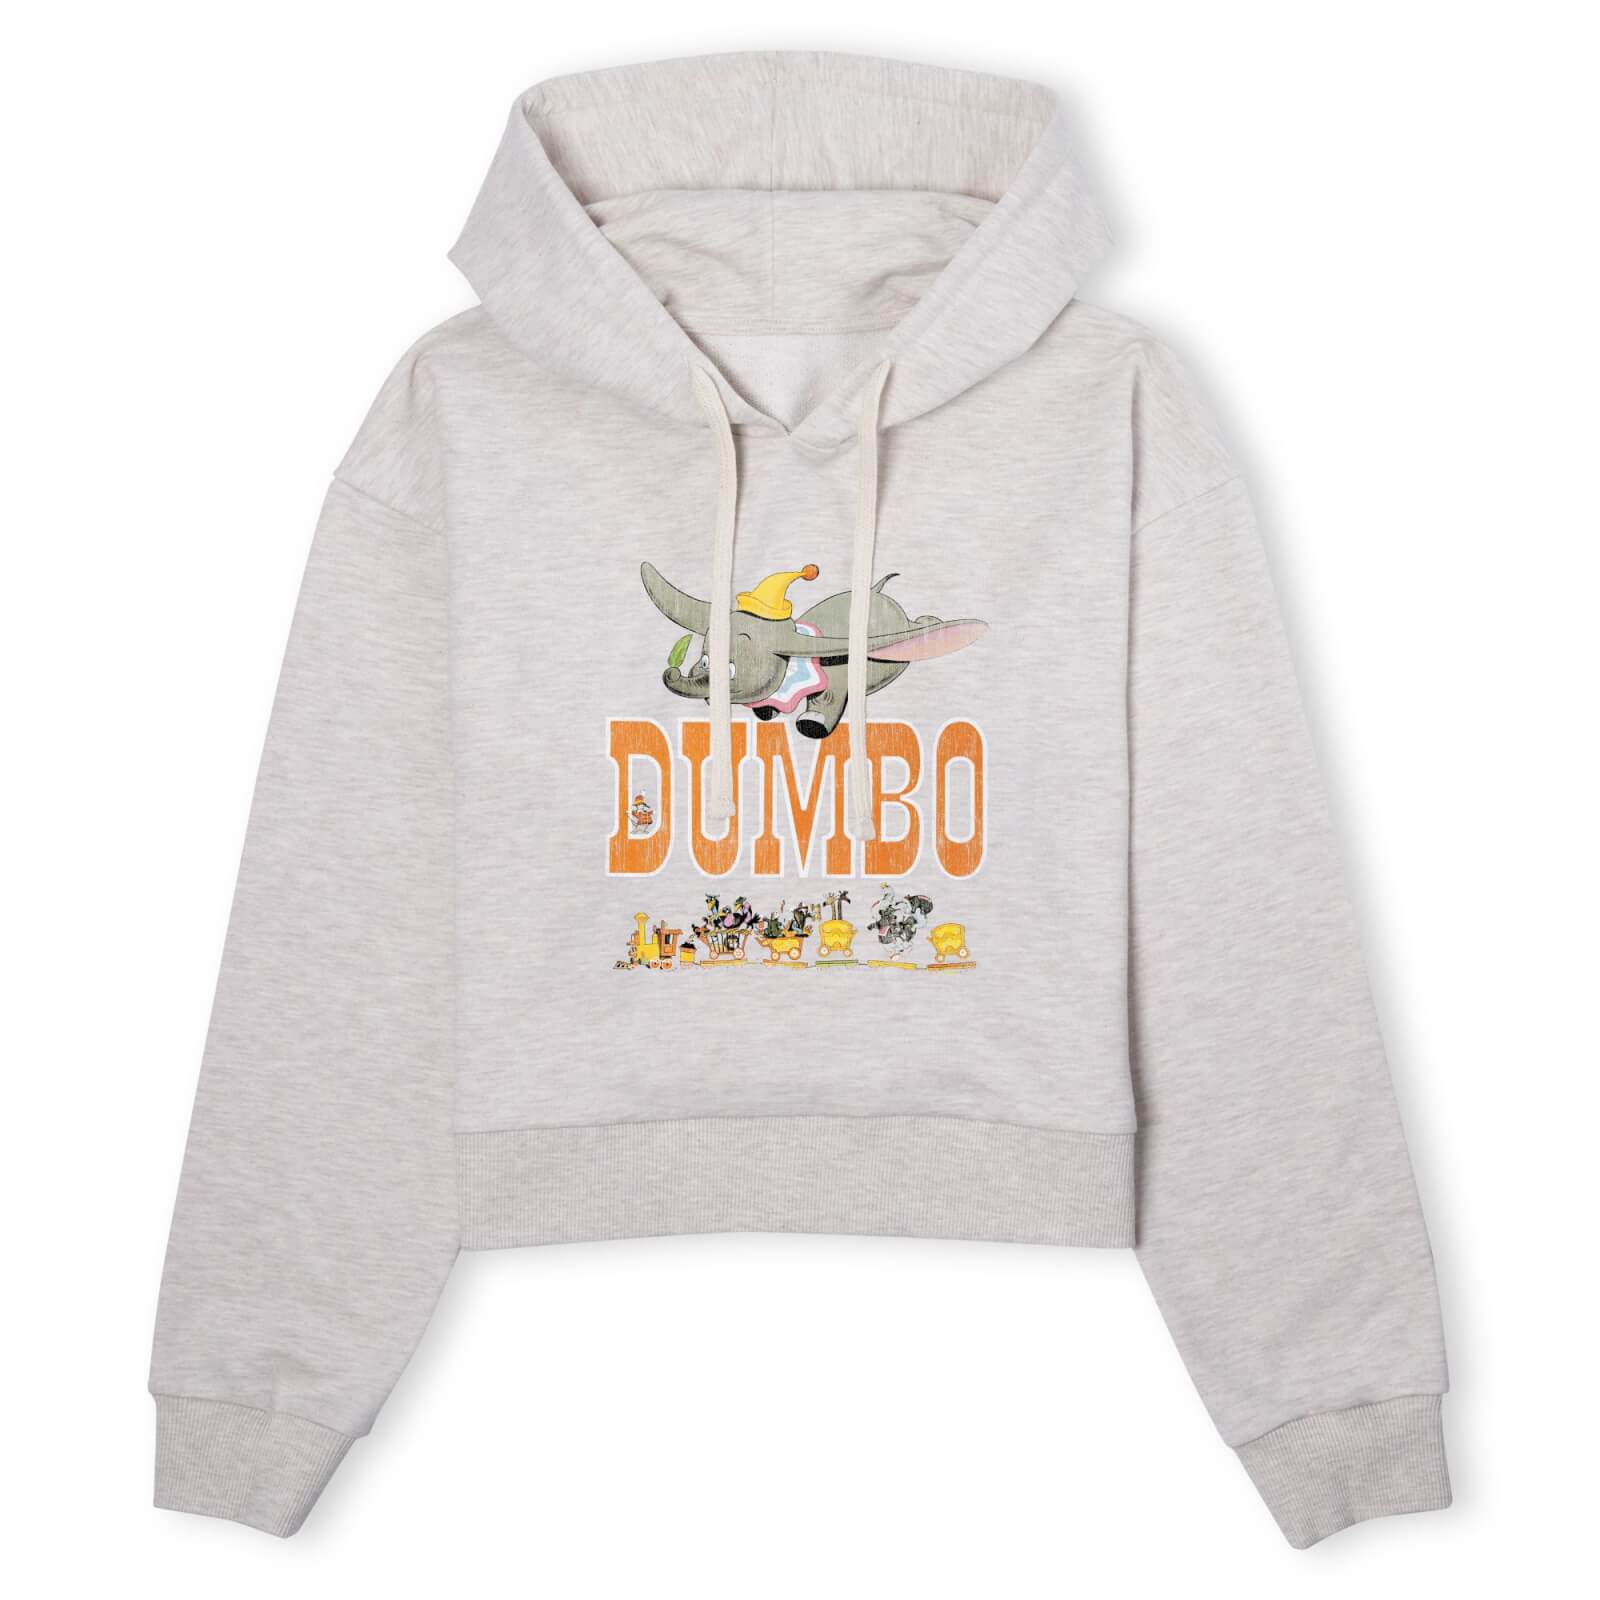 Dumbo The One The Only Women's Cropped Hoodie - Ecru Marl - M - ecru marl product